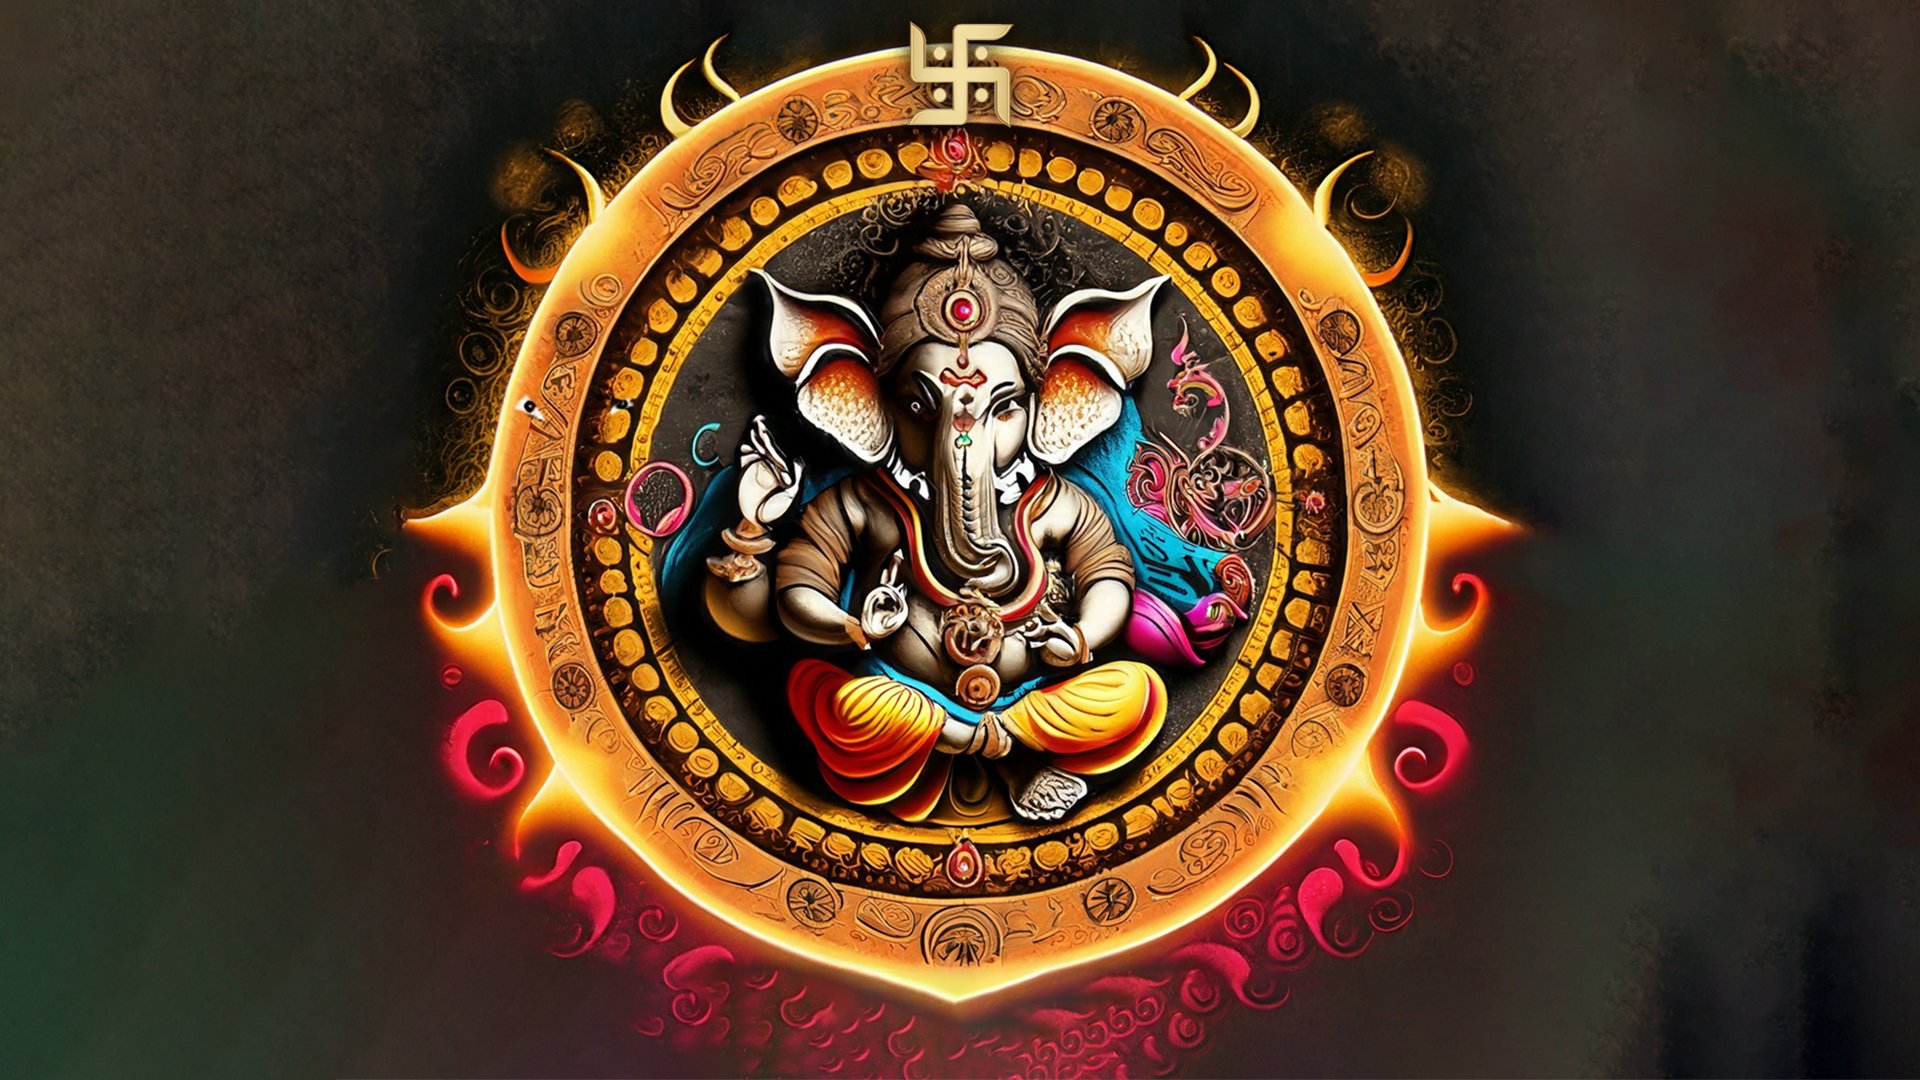 Aparna Chandnani - Ganesha pose 🙏🏻🙏🏻💐💐 Link in the bio - For Ganesha  Vandana Video 😇 गाइये गणपति जगवंदन शंकर सुवन भवानी के नंदन ॥ Sing the  praises of Ganpati (Lord Ganesha),